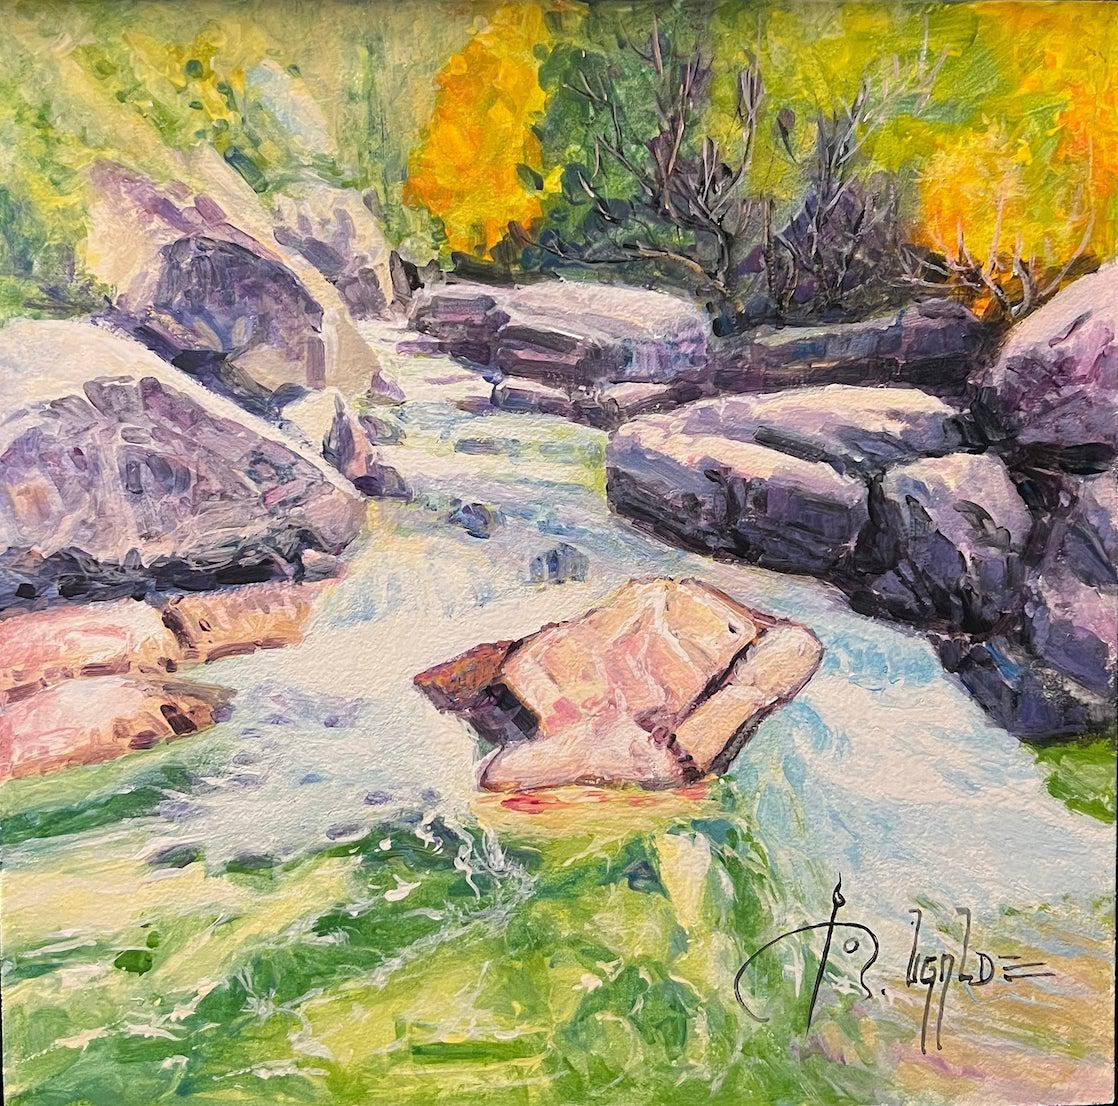 Inez River-Painting-Roberto Ugalde-Sorrel Sky Gallery